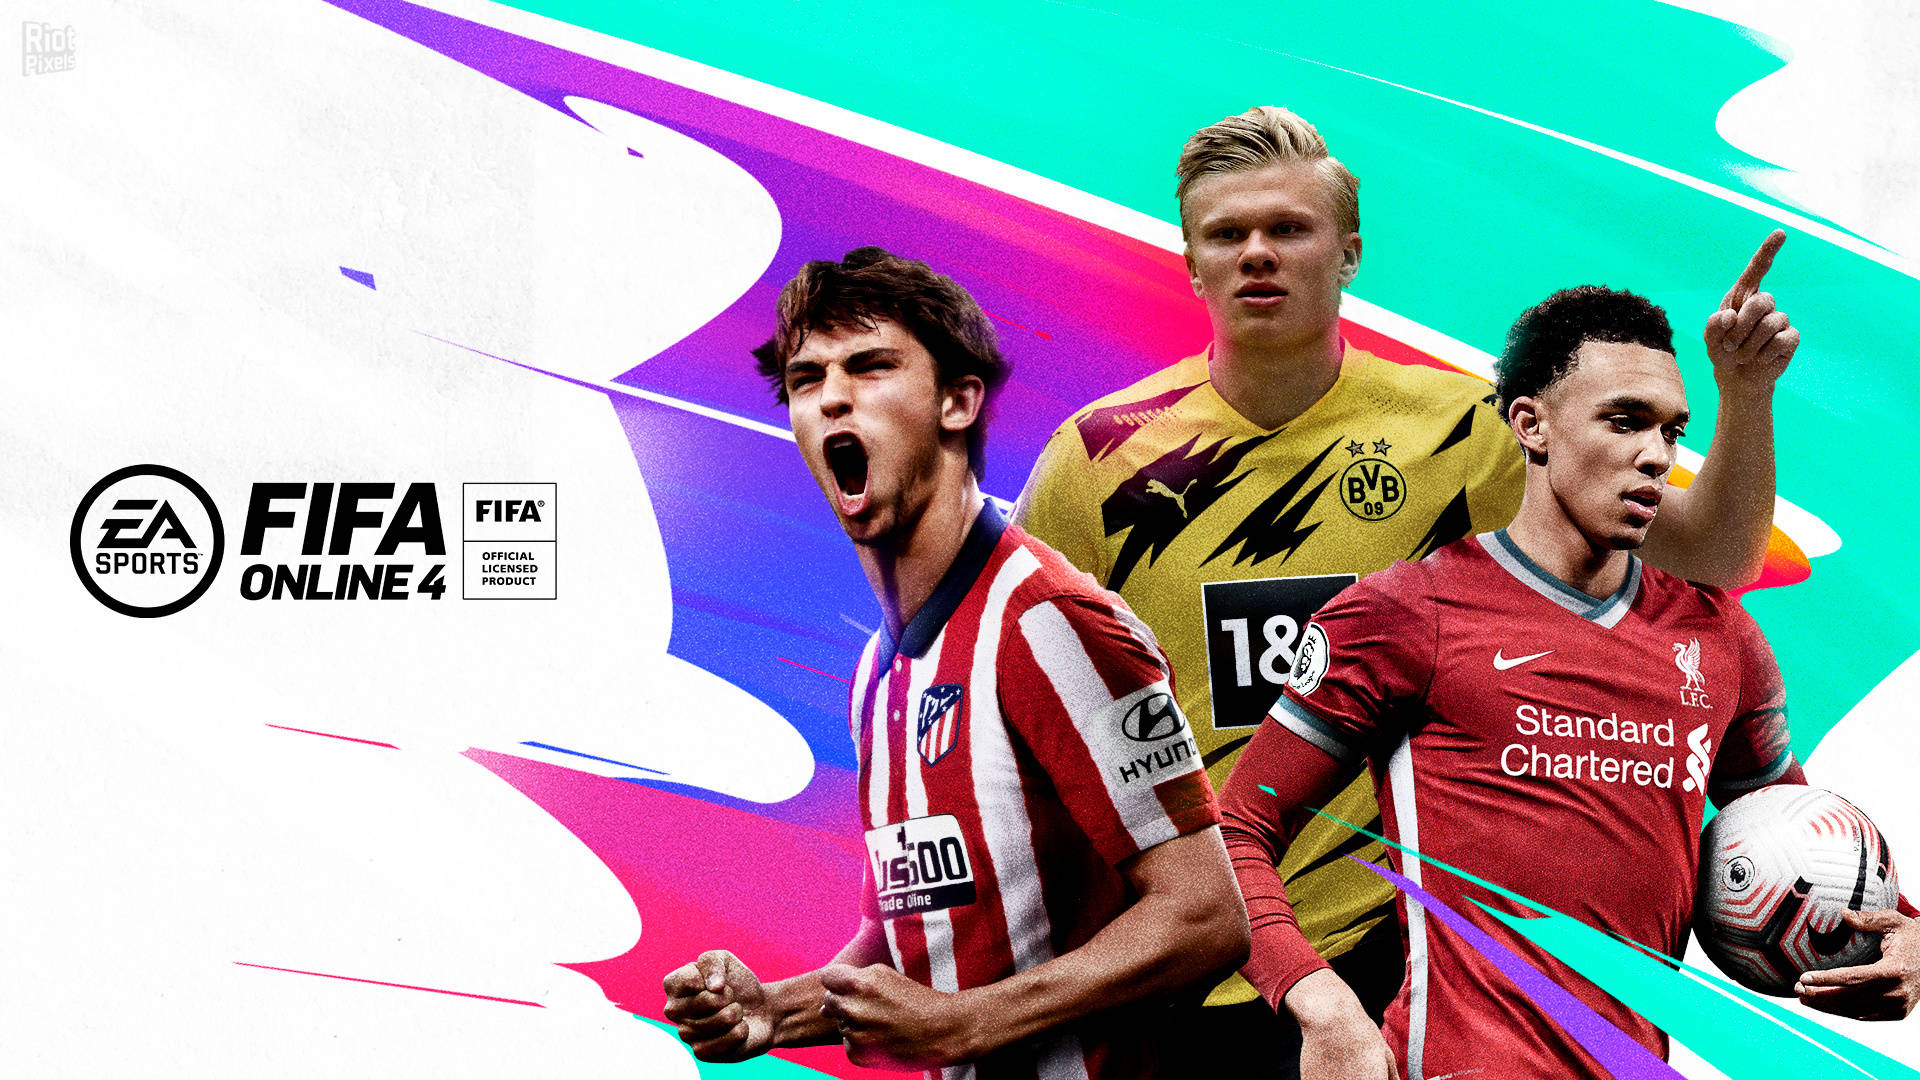 Fifa Online 4 Players Wallpaper